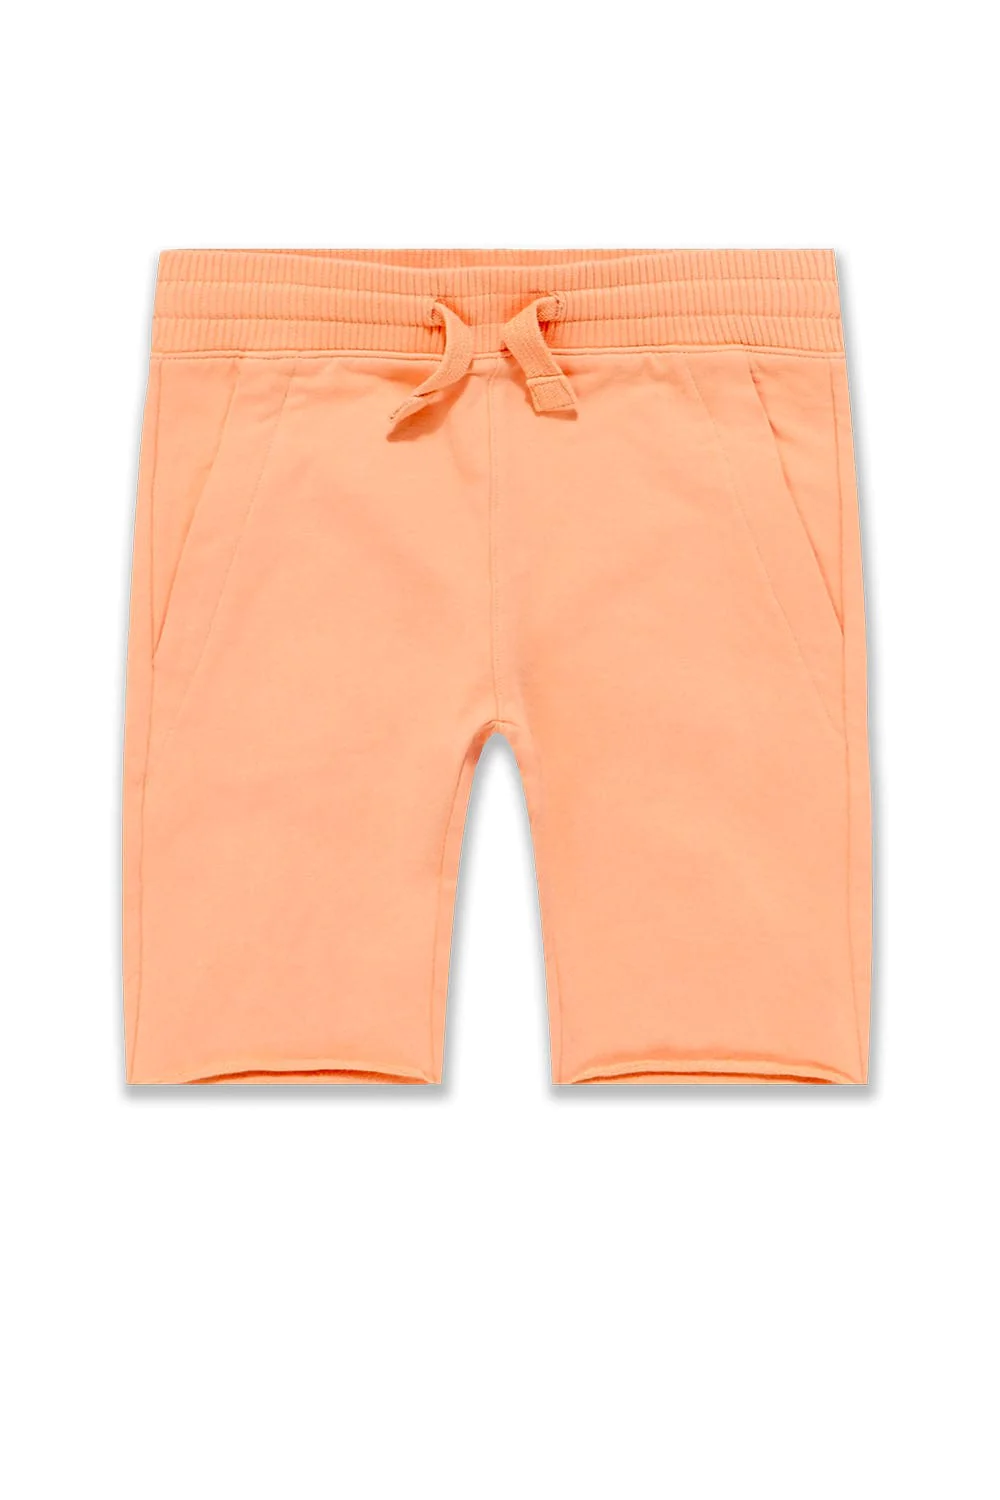 jordan-craig-kids-palma-french-terry-shorts-8450sb-peach